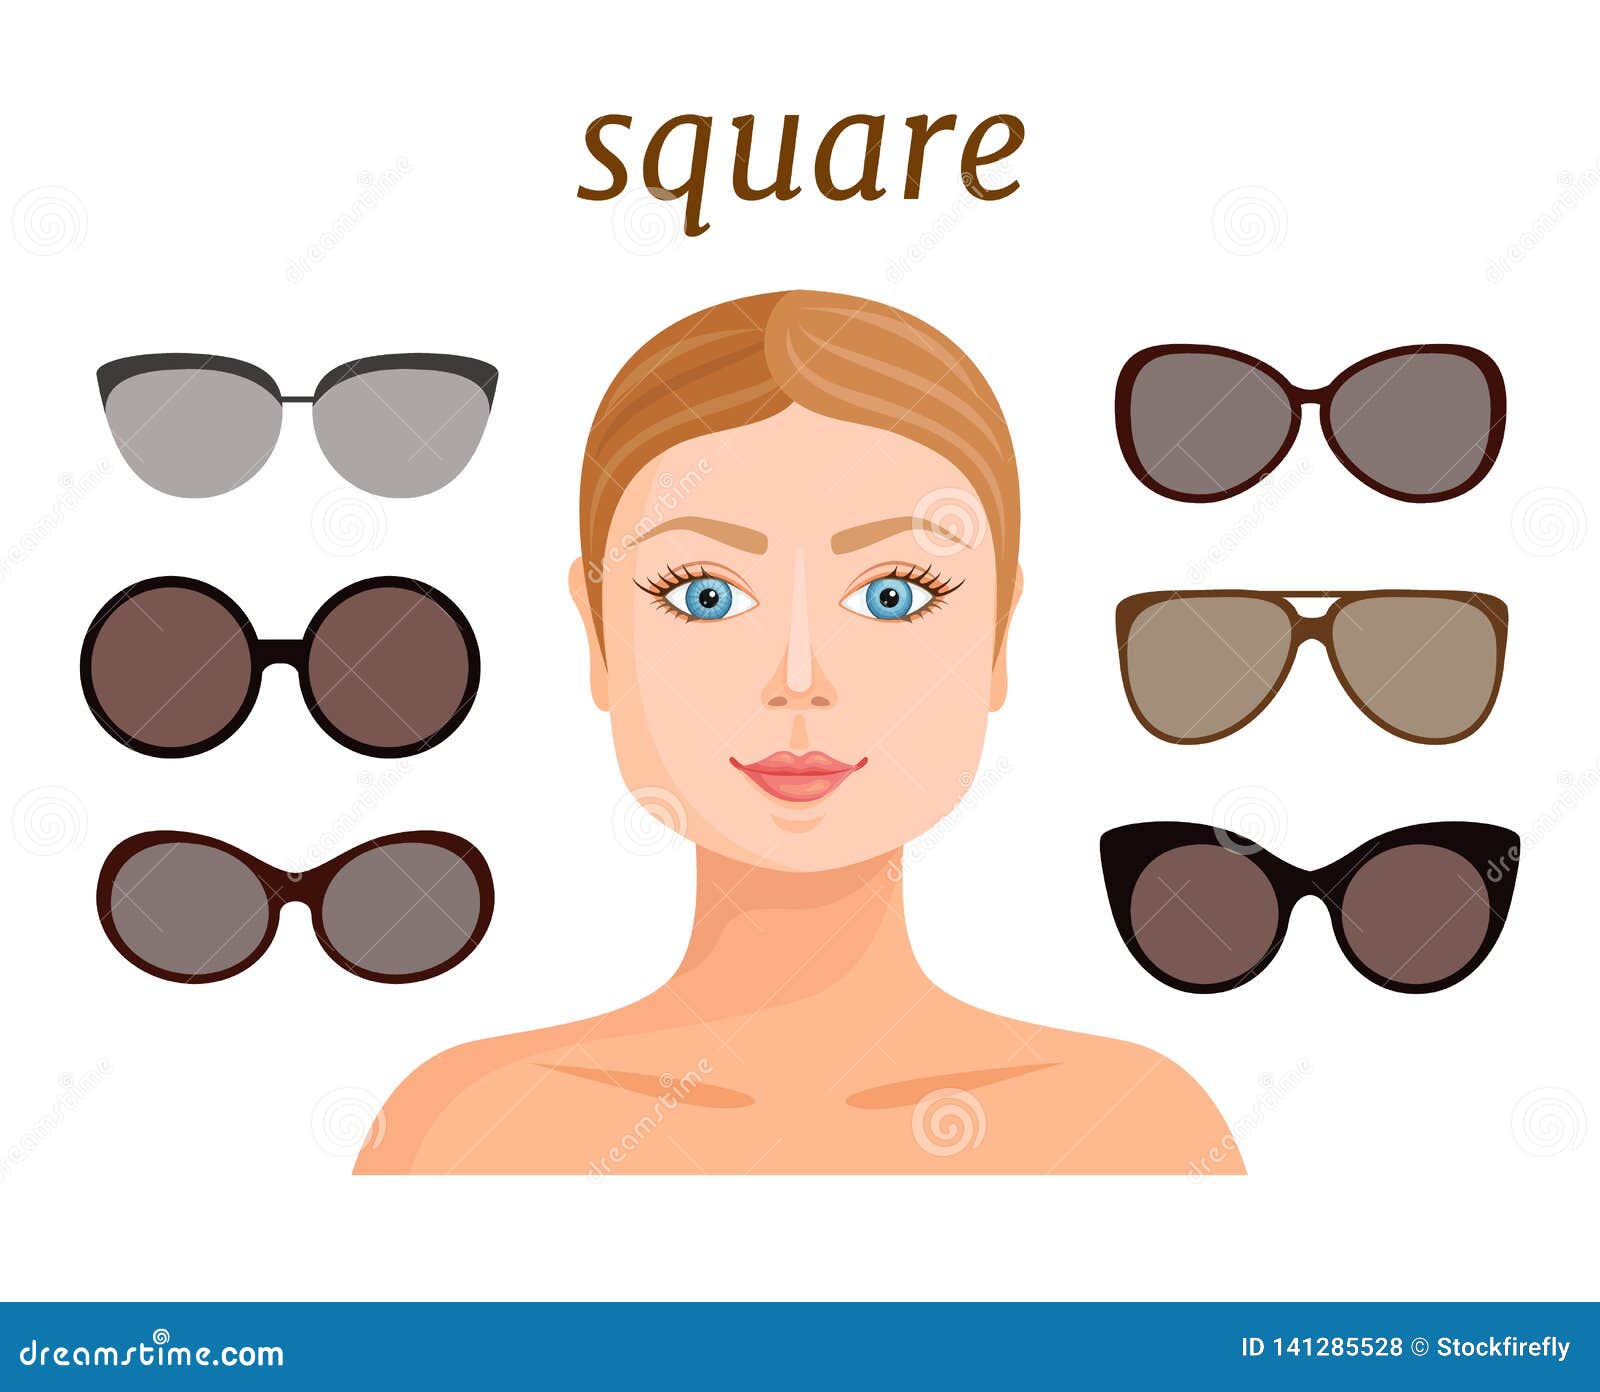 Sunglasses for square faces